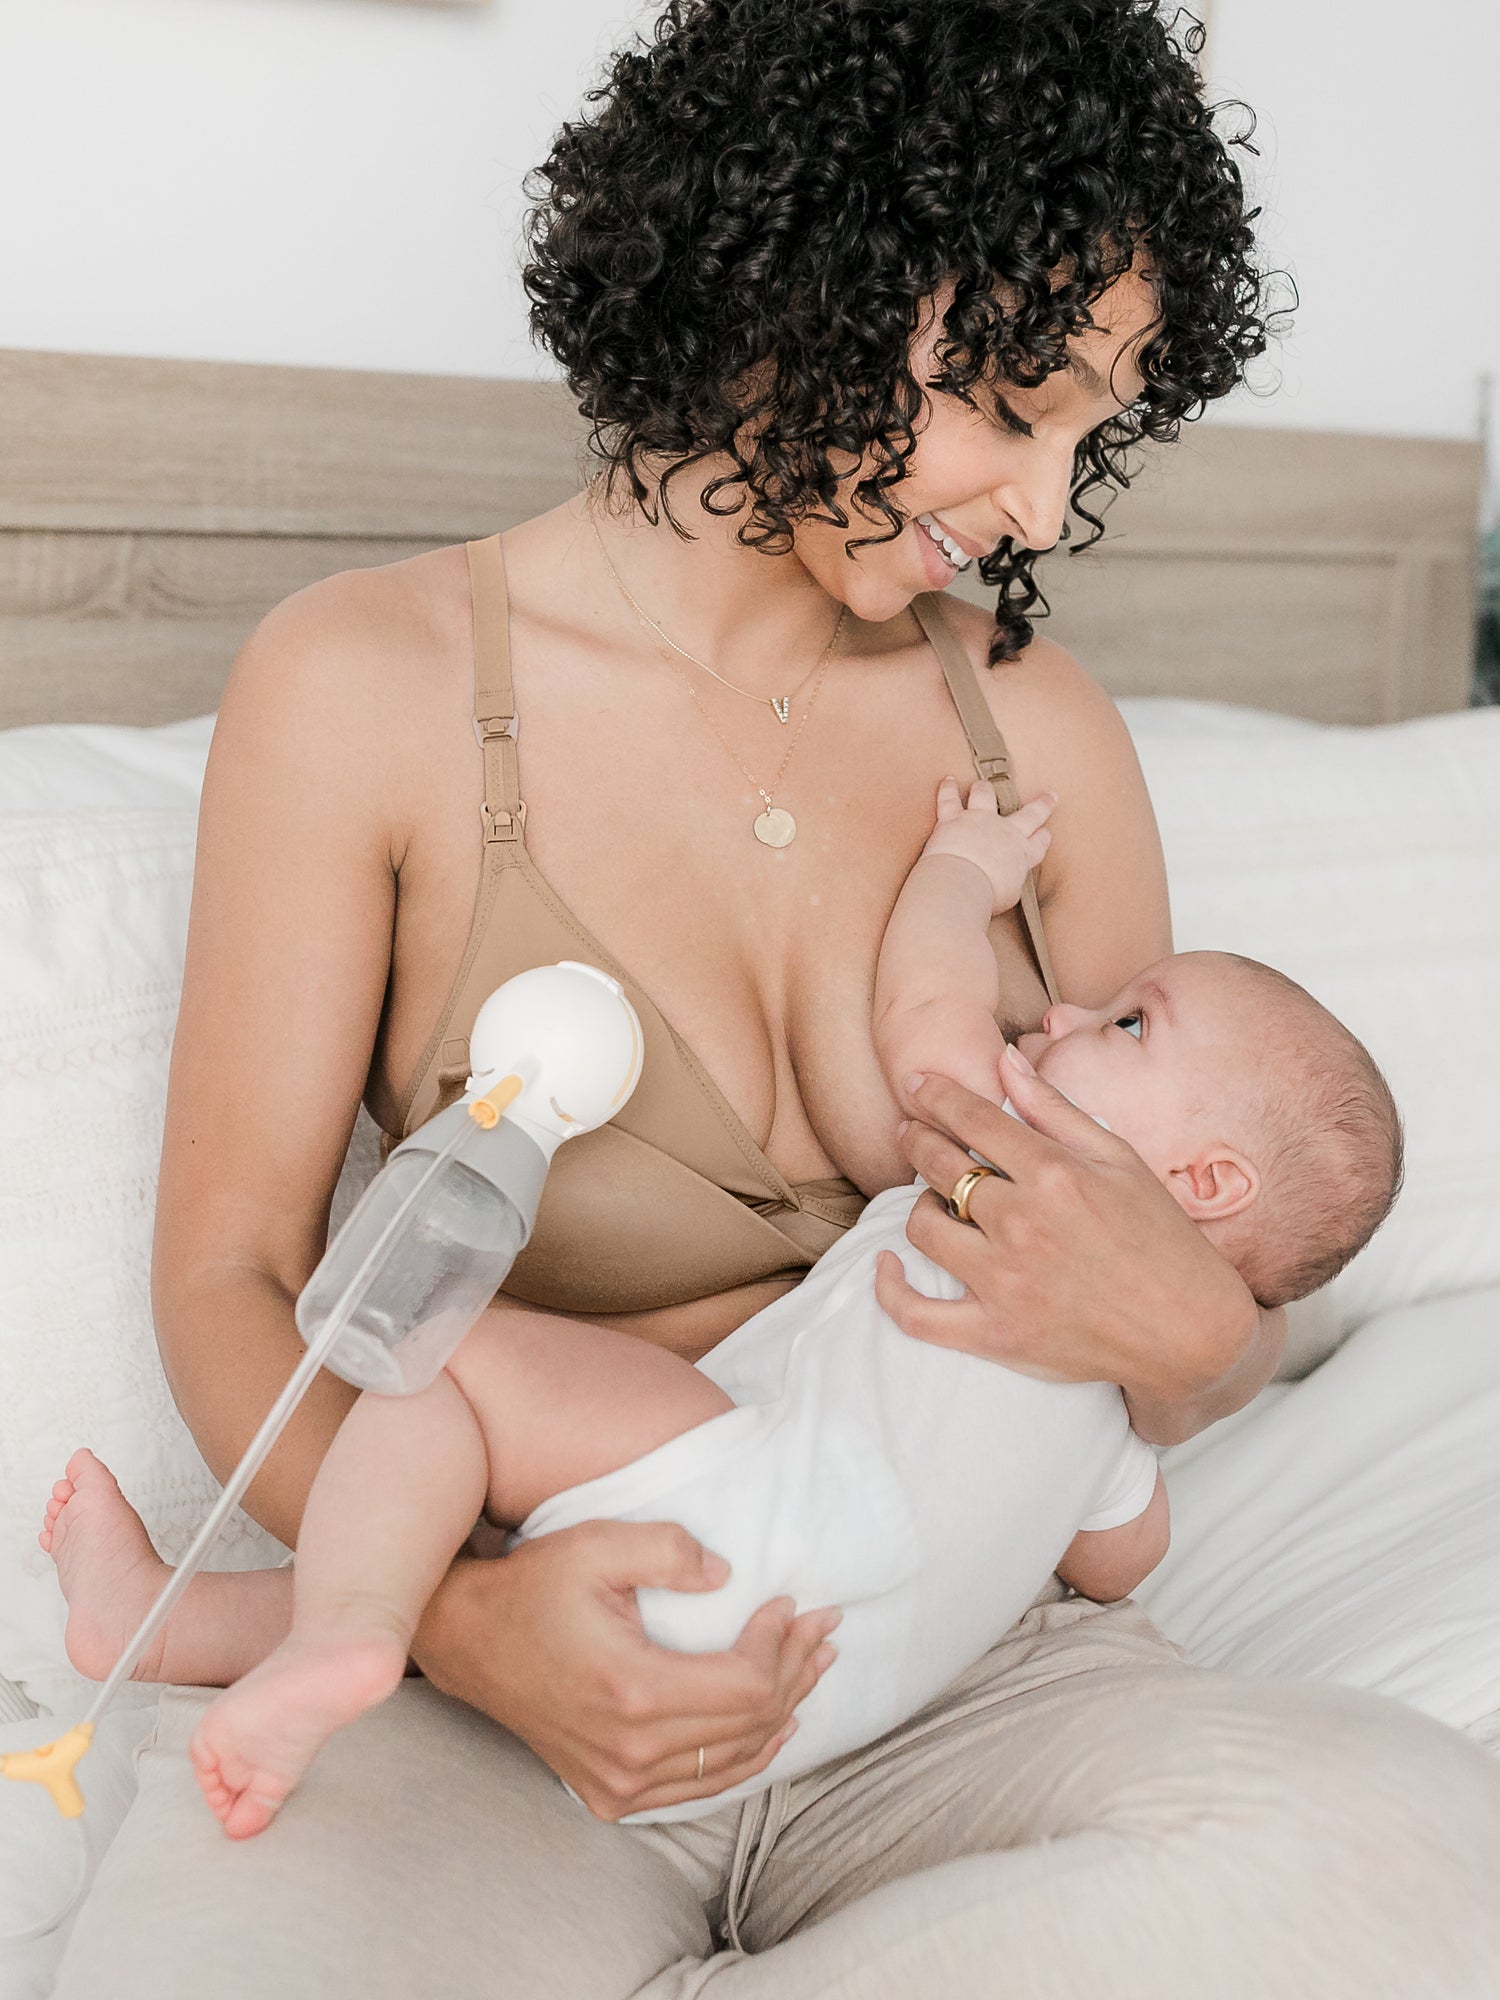 Maternity Hands Free Pumping Bra Wireless Padded Breastfeeding